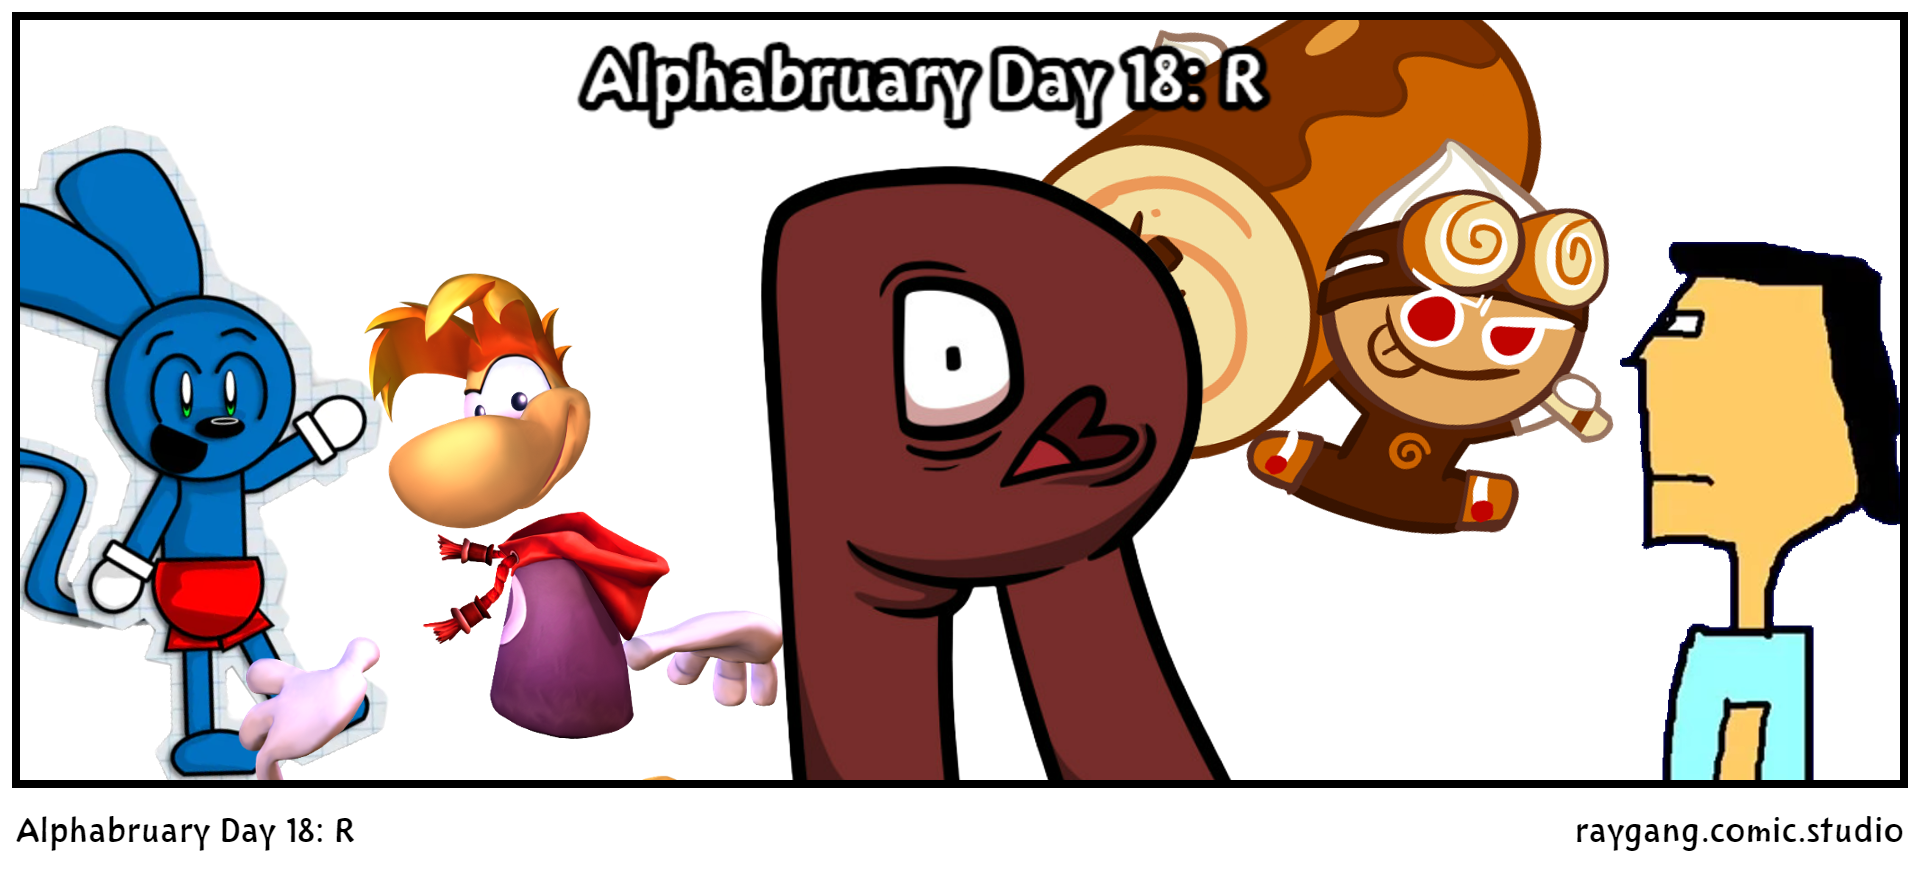 Alphabruary Day 18: R